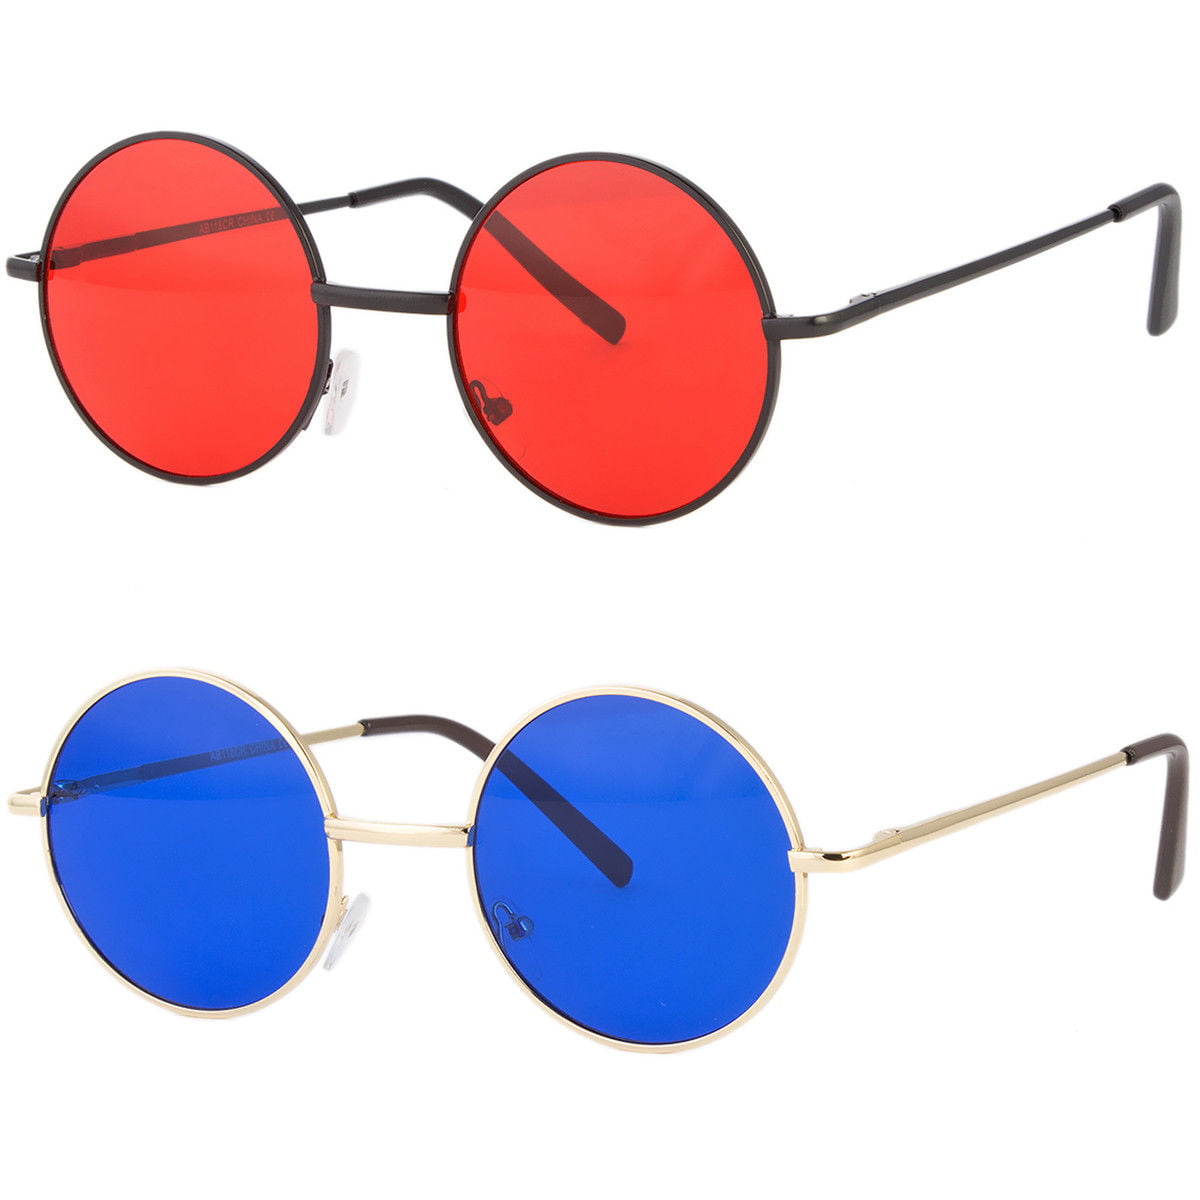 John Lennon style Sunglasses Round Retro vintage style 60s 70s hippie glasses 